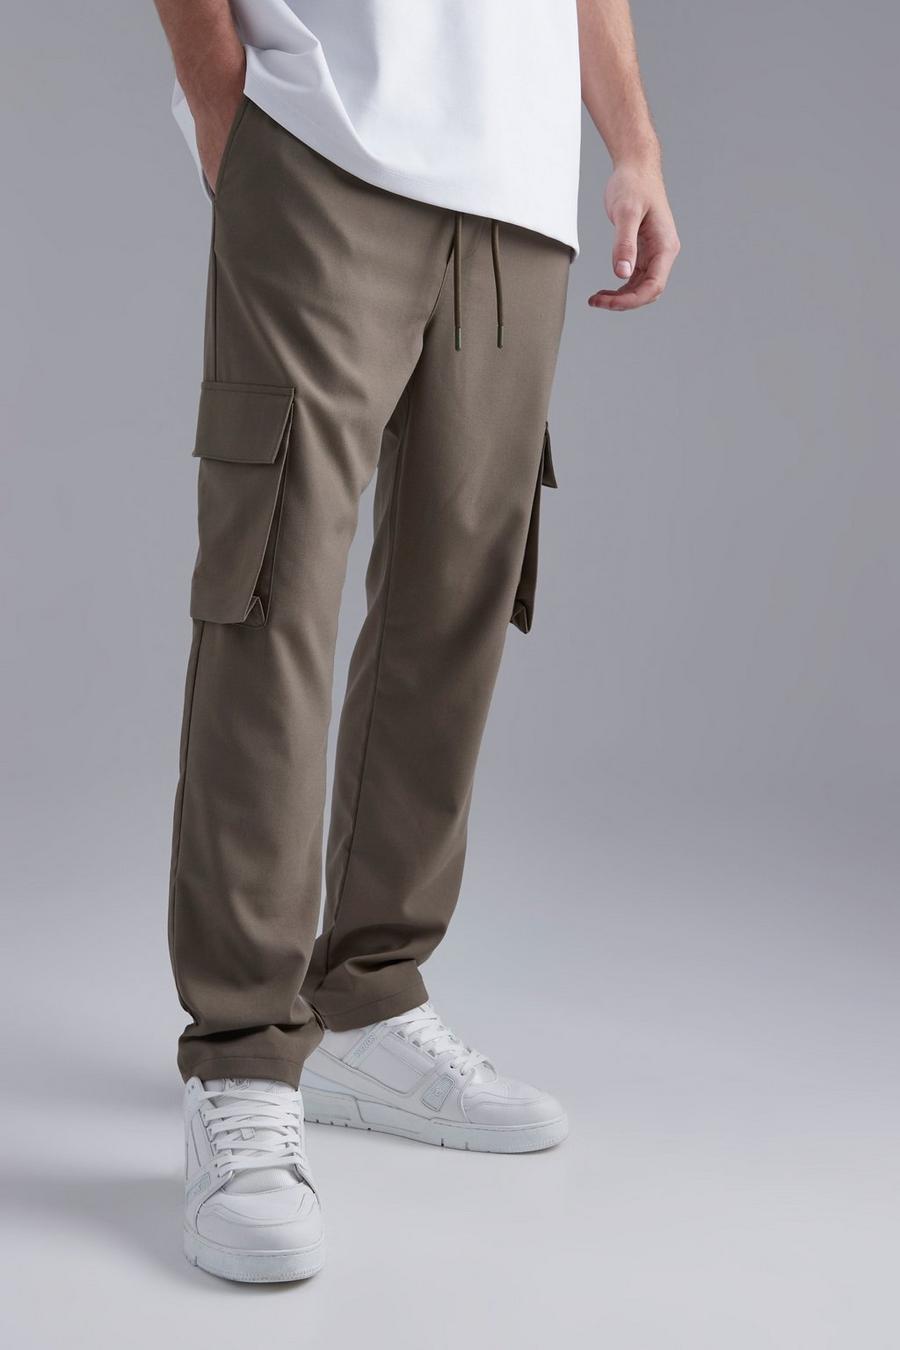 Pantaloni tuta Smart affusolati stile Cargo, Sage verde